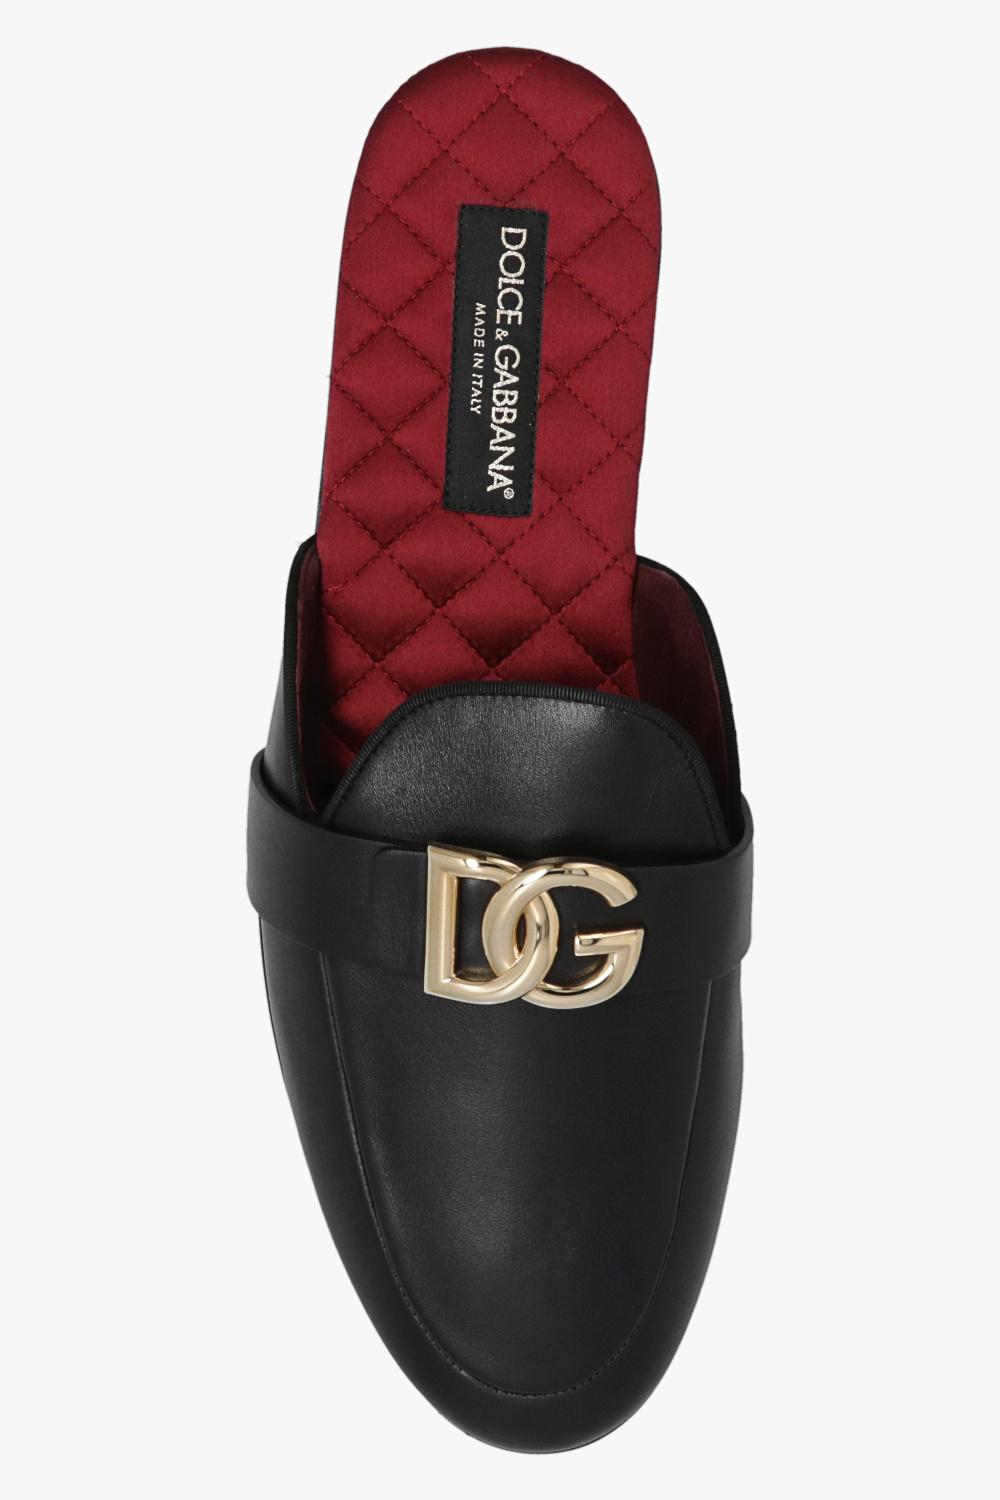 Dolce & Gabbana ‘Bramante’ leather slides